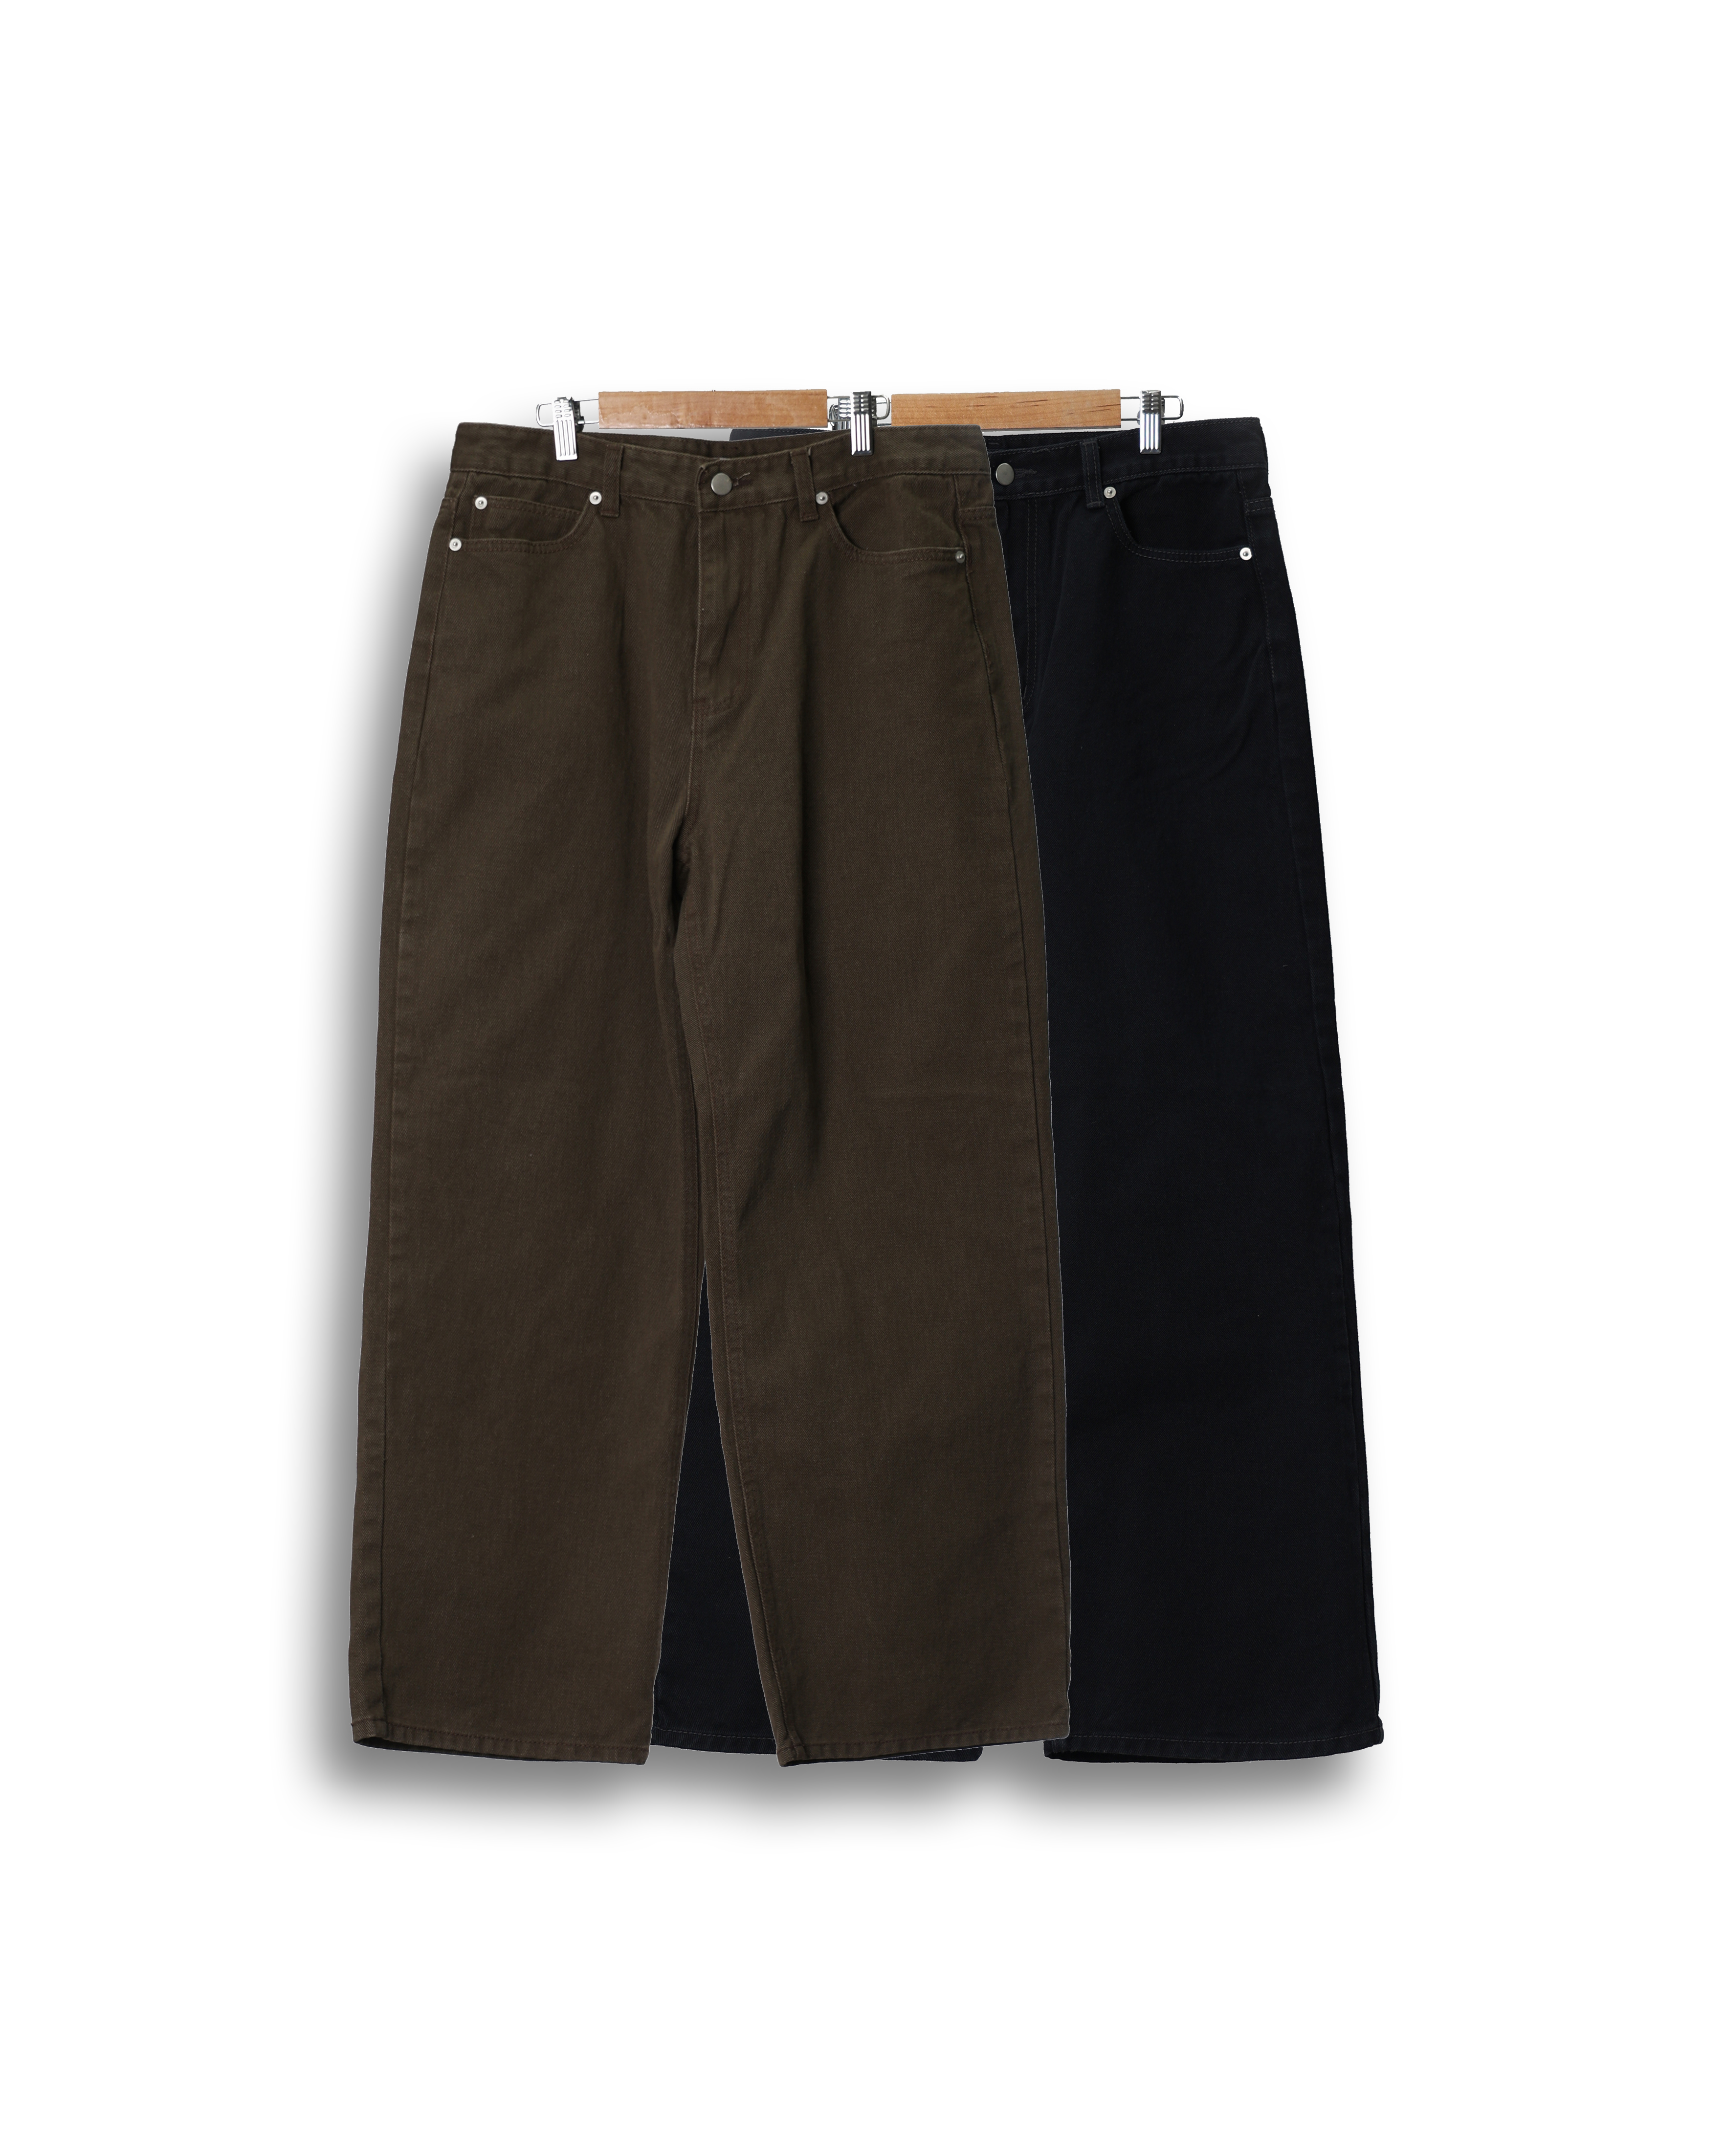 TSPOO Standard Cation Wide Denim Pants (Black/Brown)